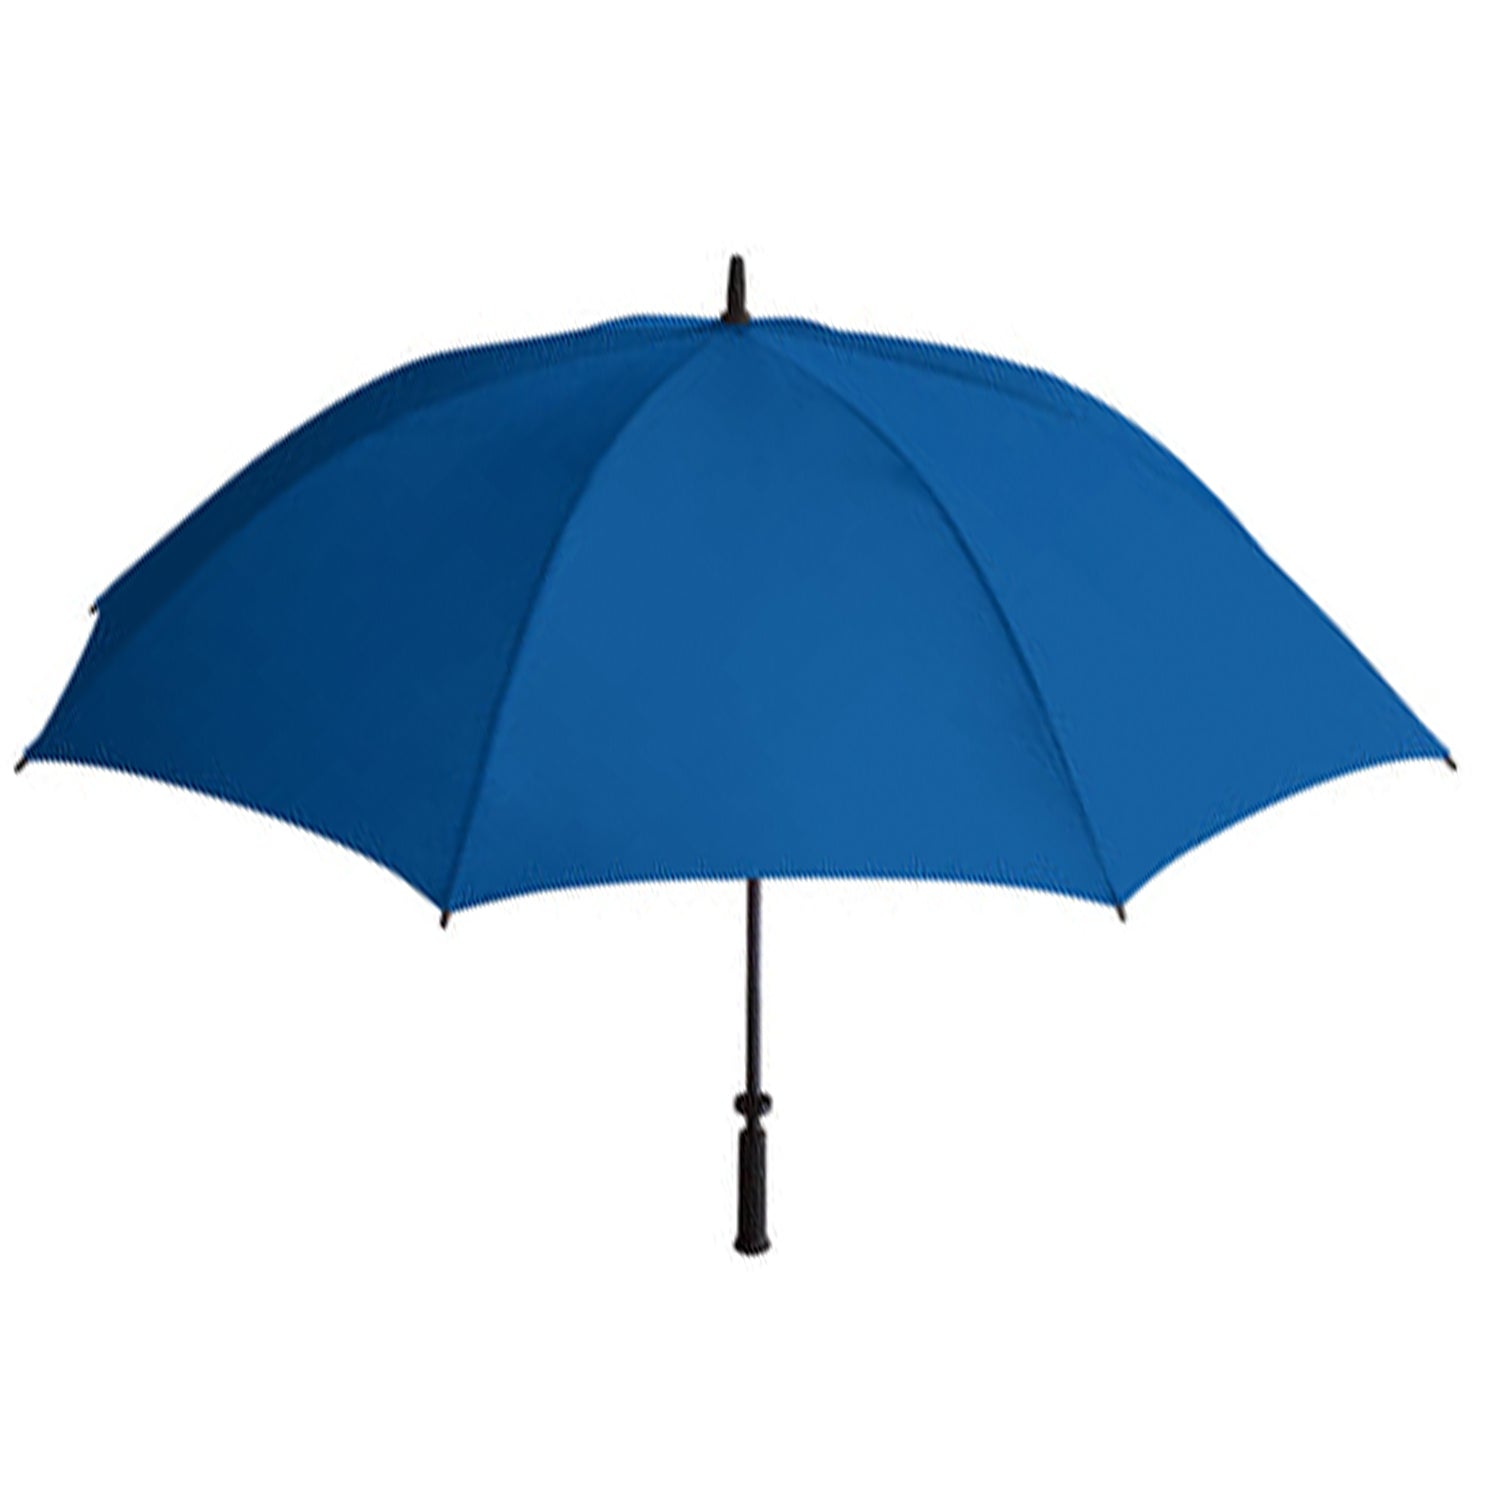 Hurricane Golf Umbrella - Auto Open - Lockheed Martin Company Store